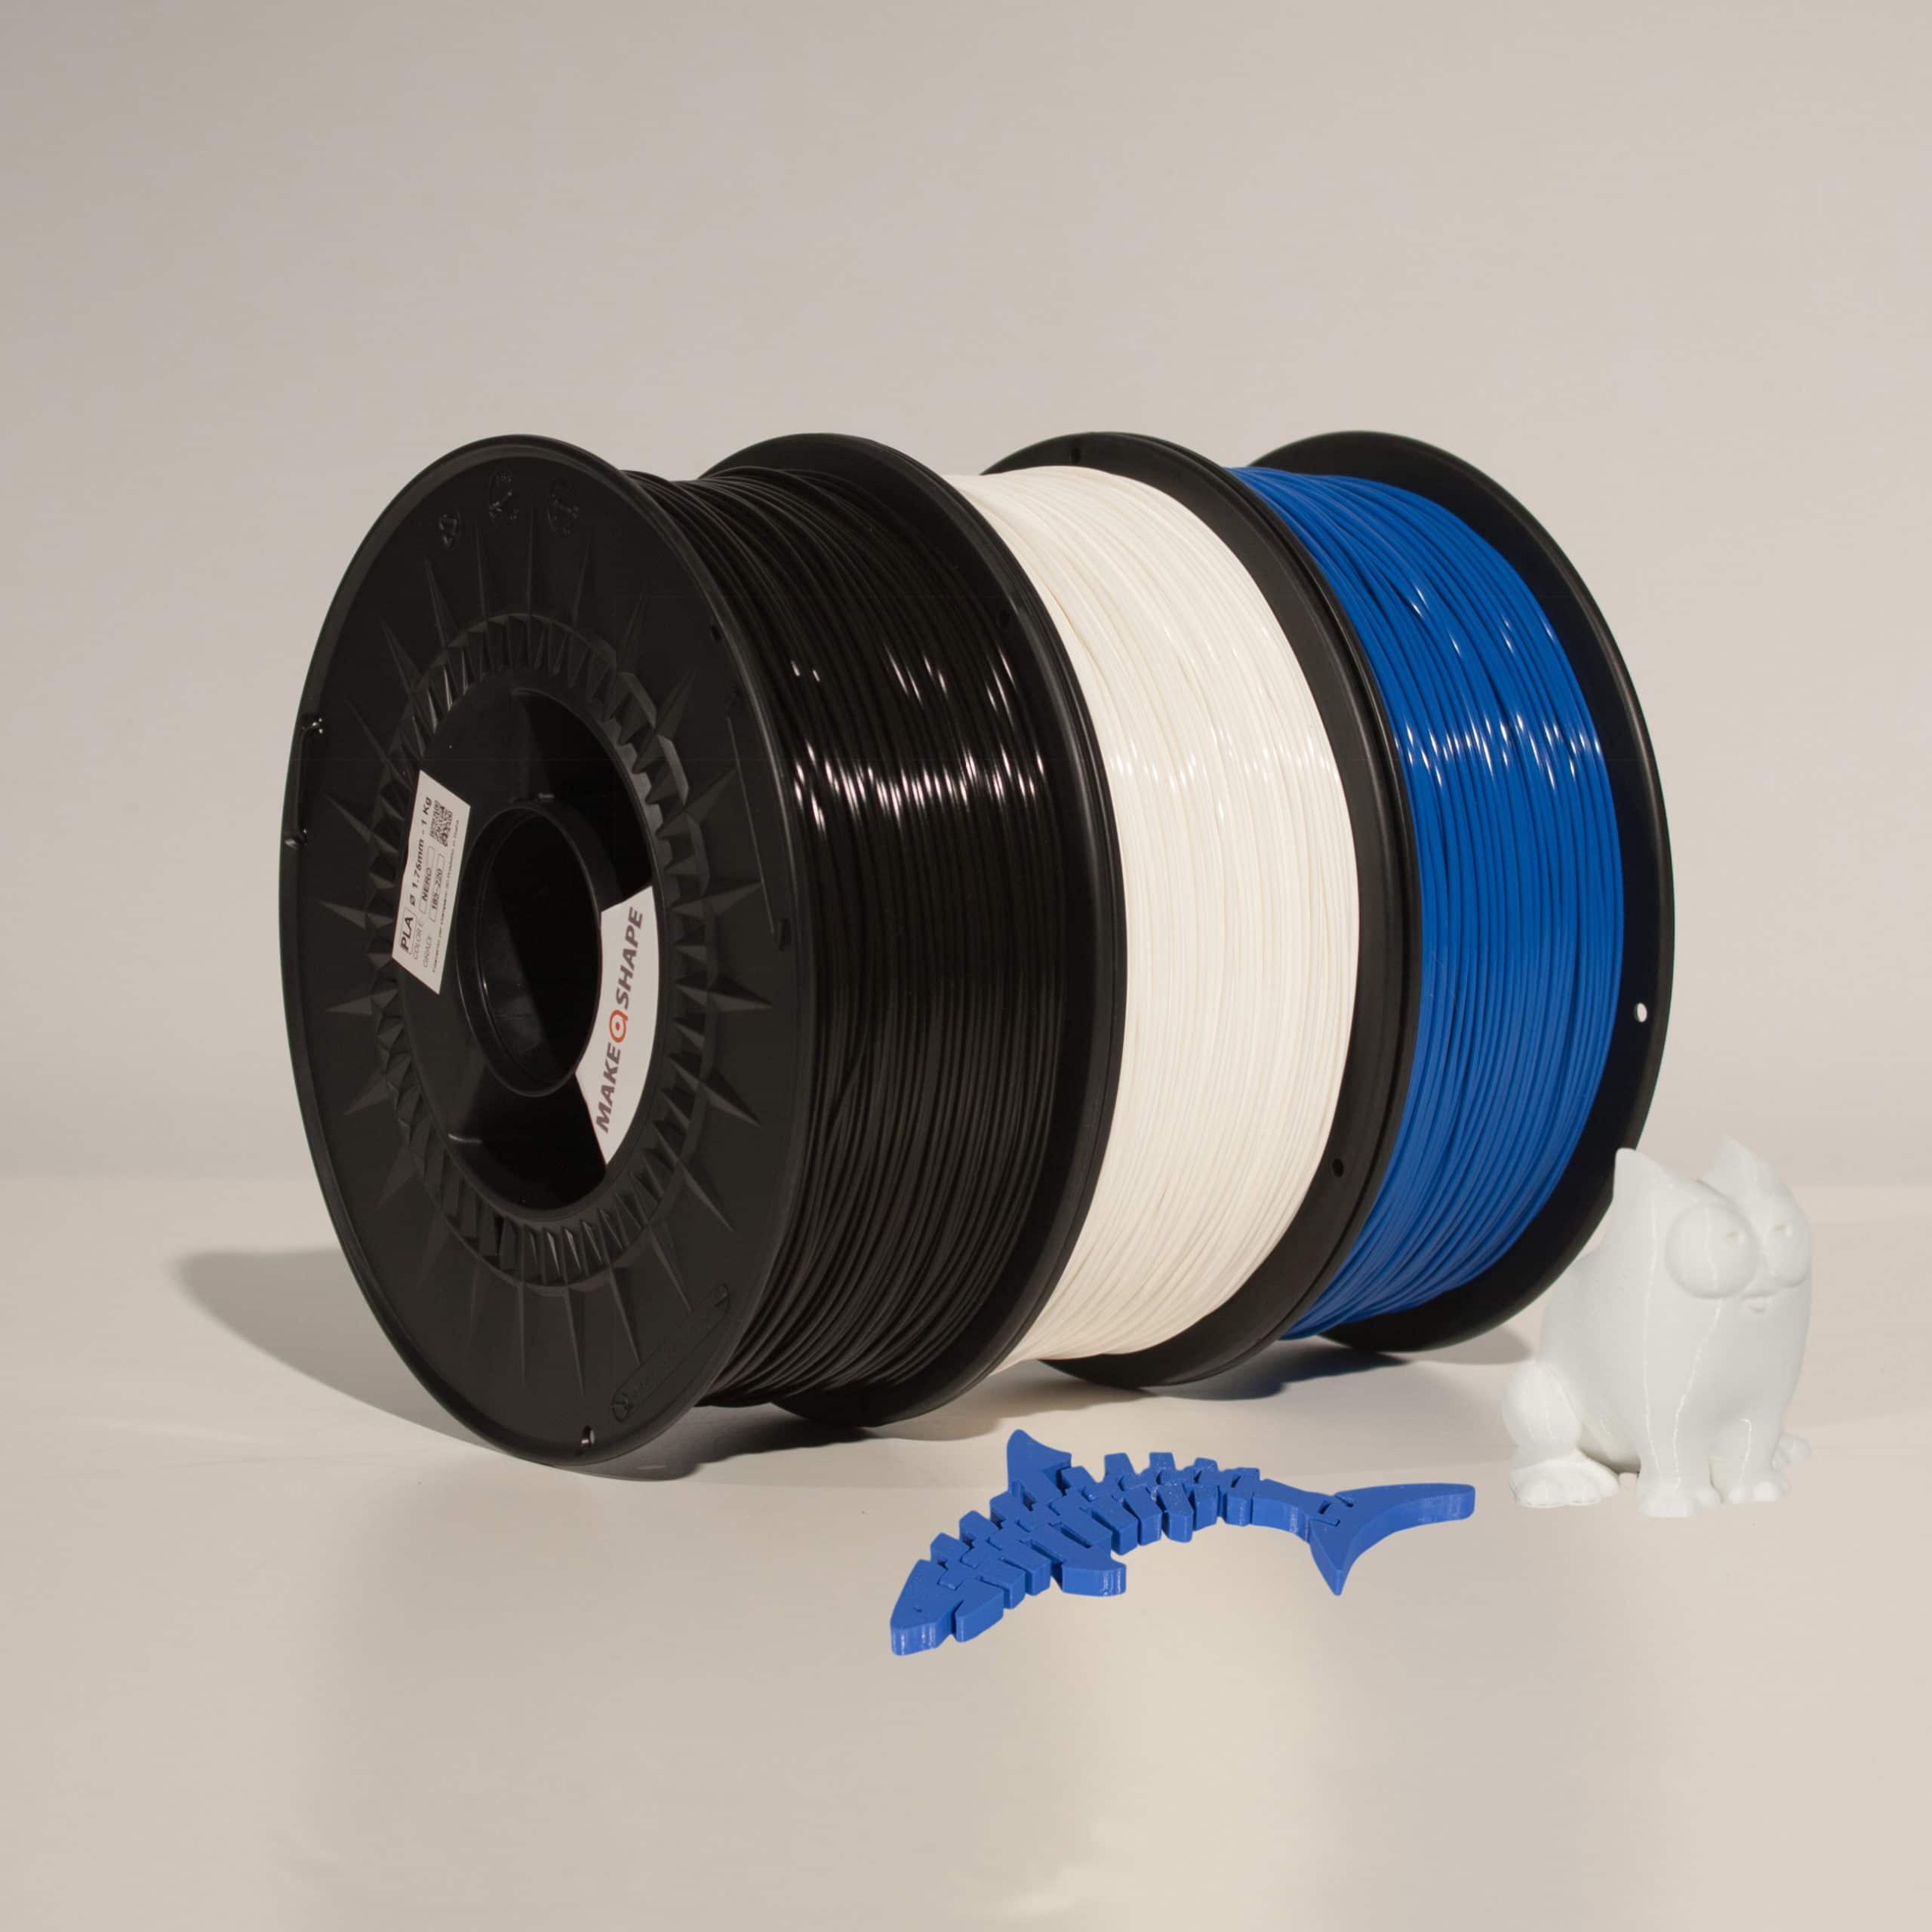 Filamento Stampa 3D - Make a Shape Produzione 100% Italiana